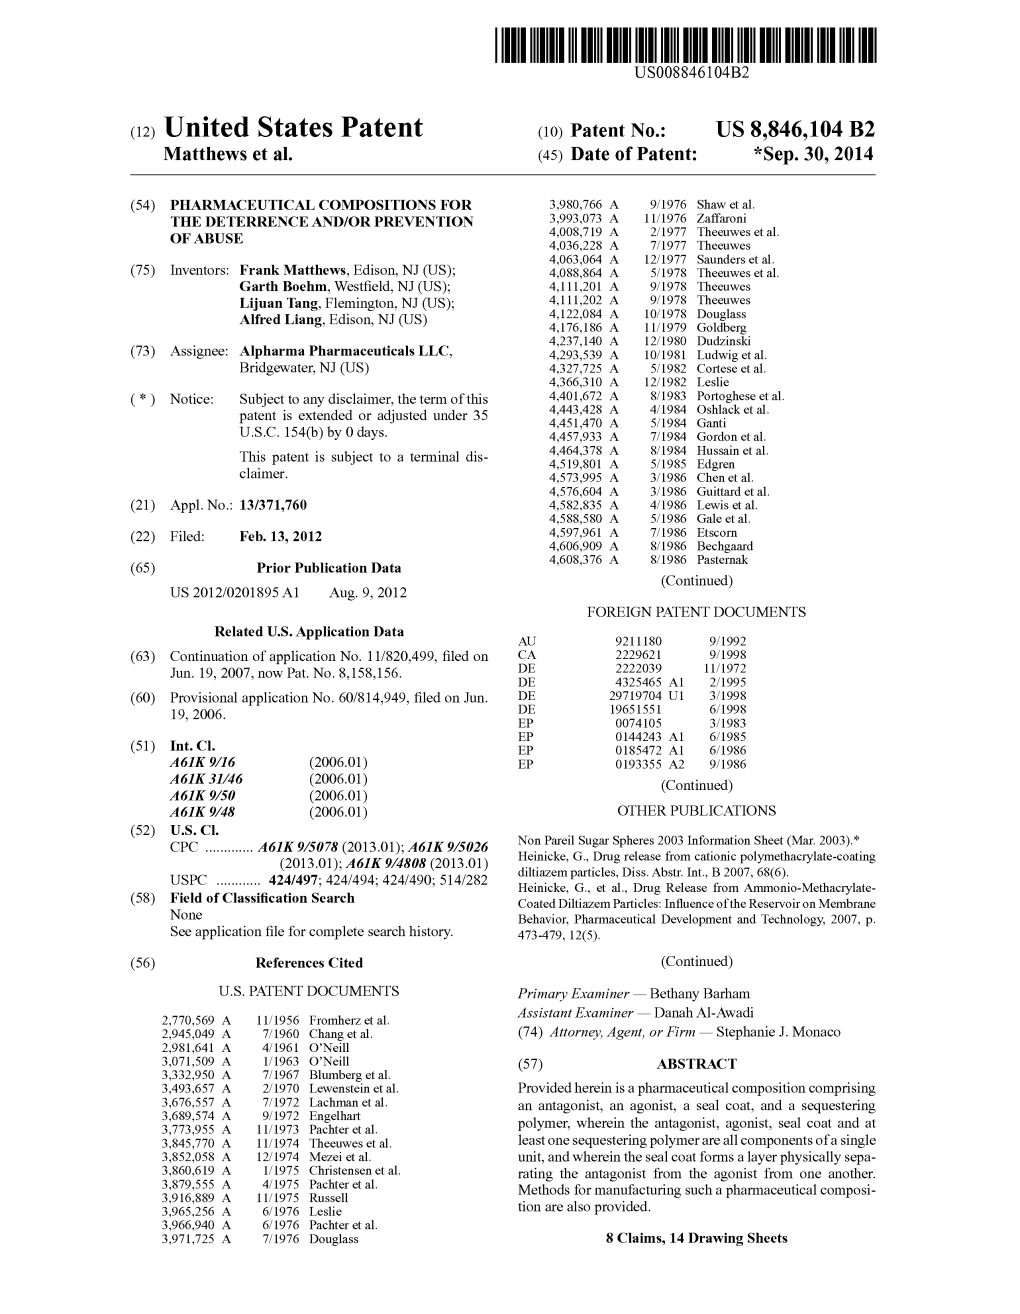 (12) United States Patent (10) Patent No.: US 8,846,104 B2 Matthews Et Al